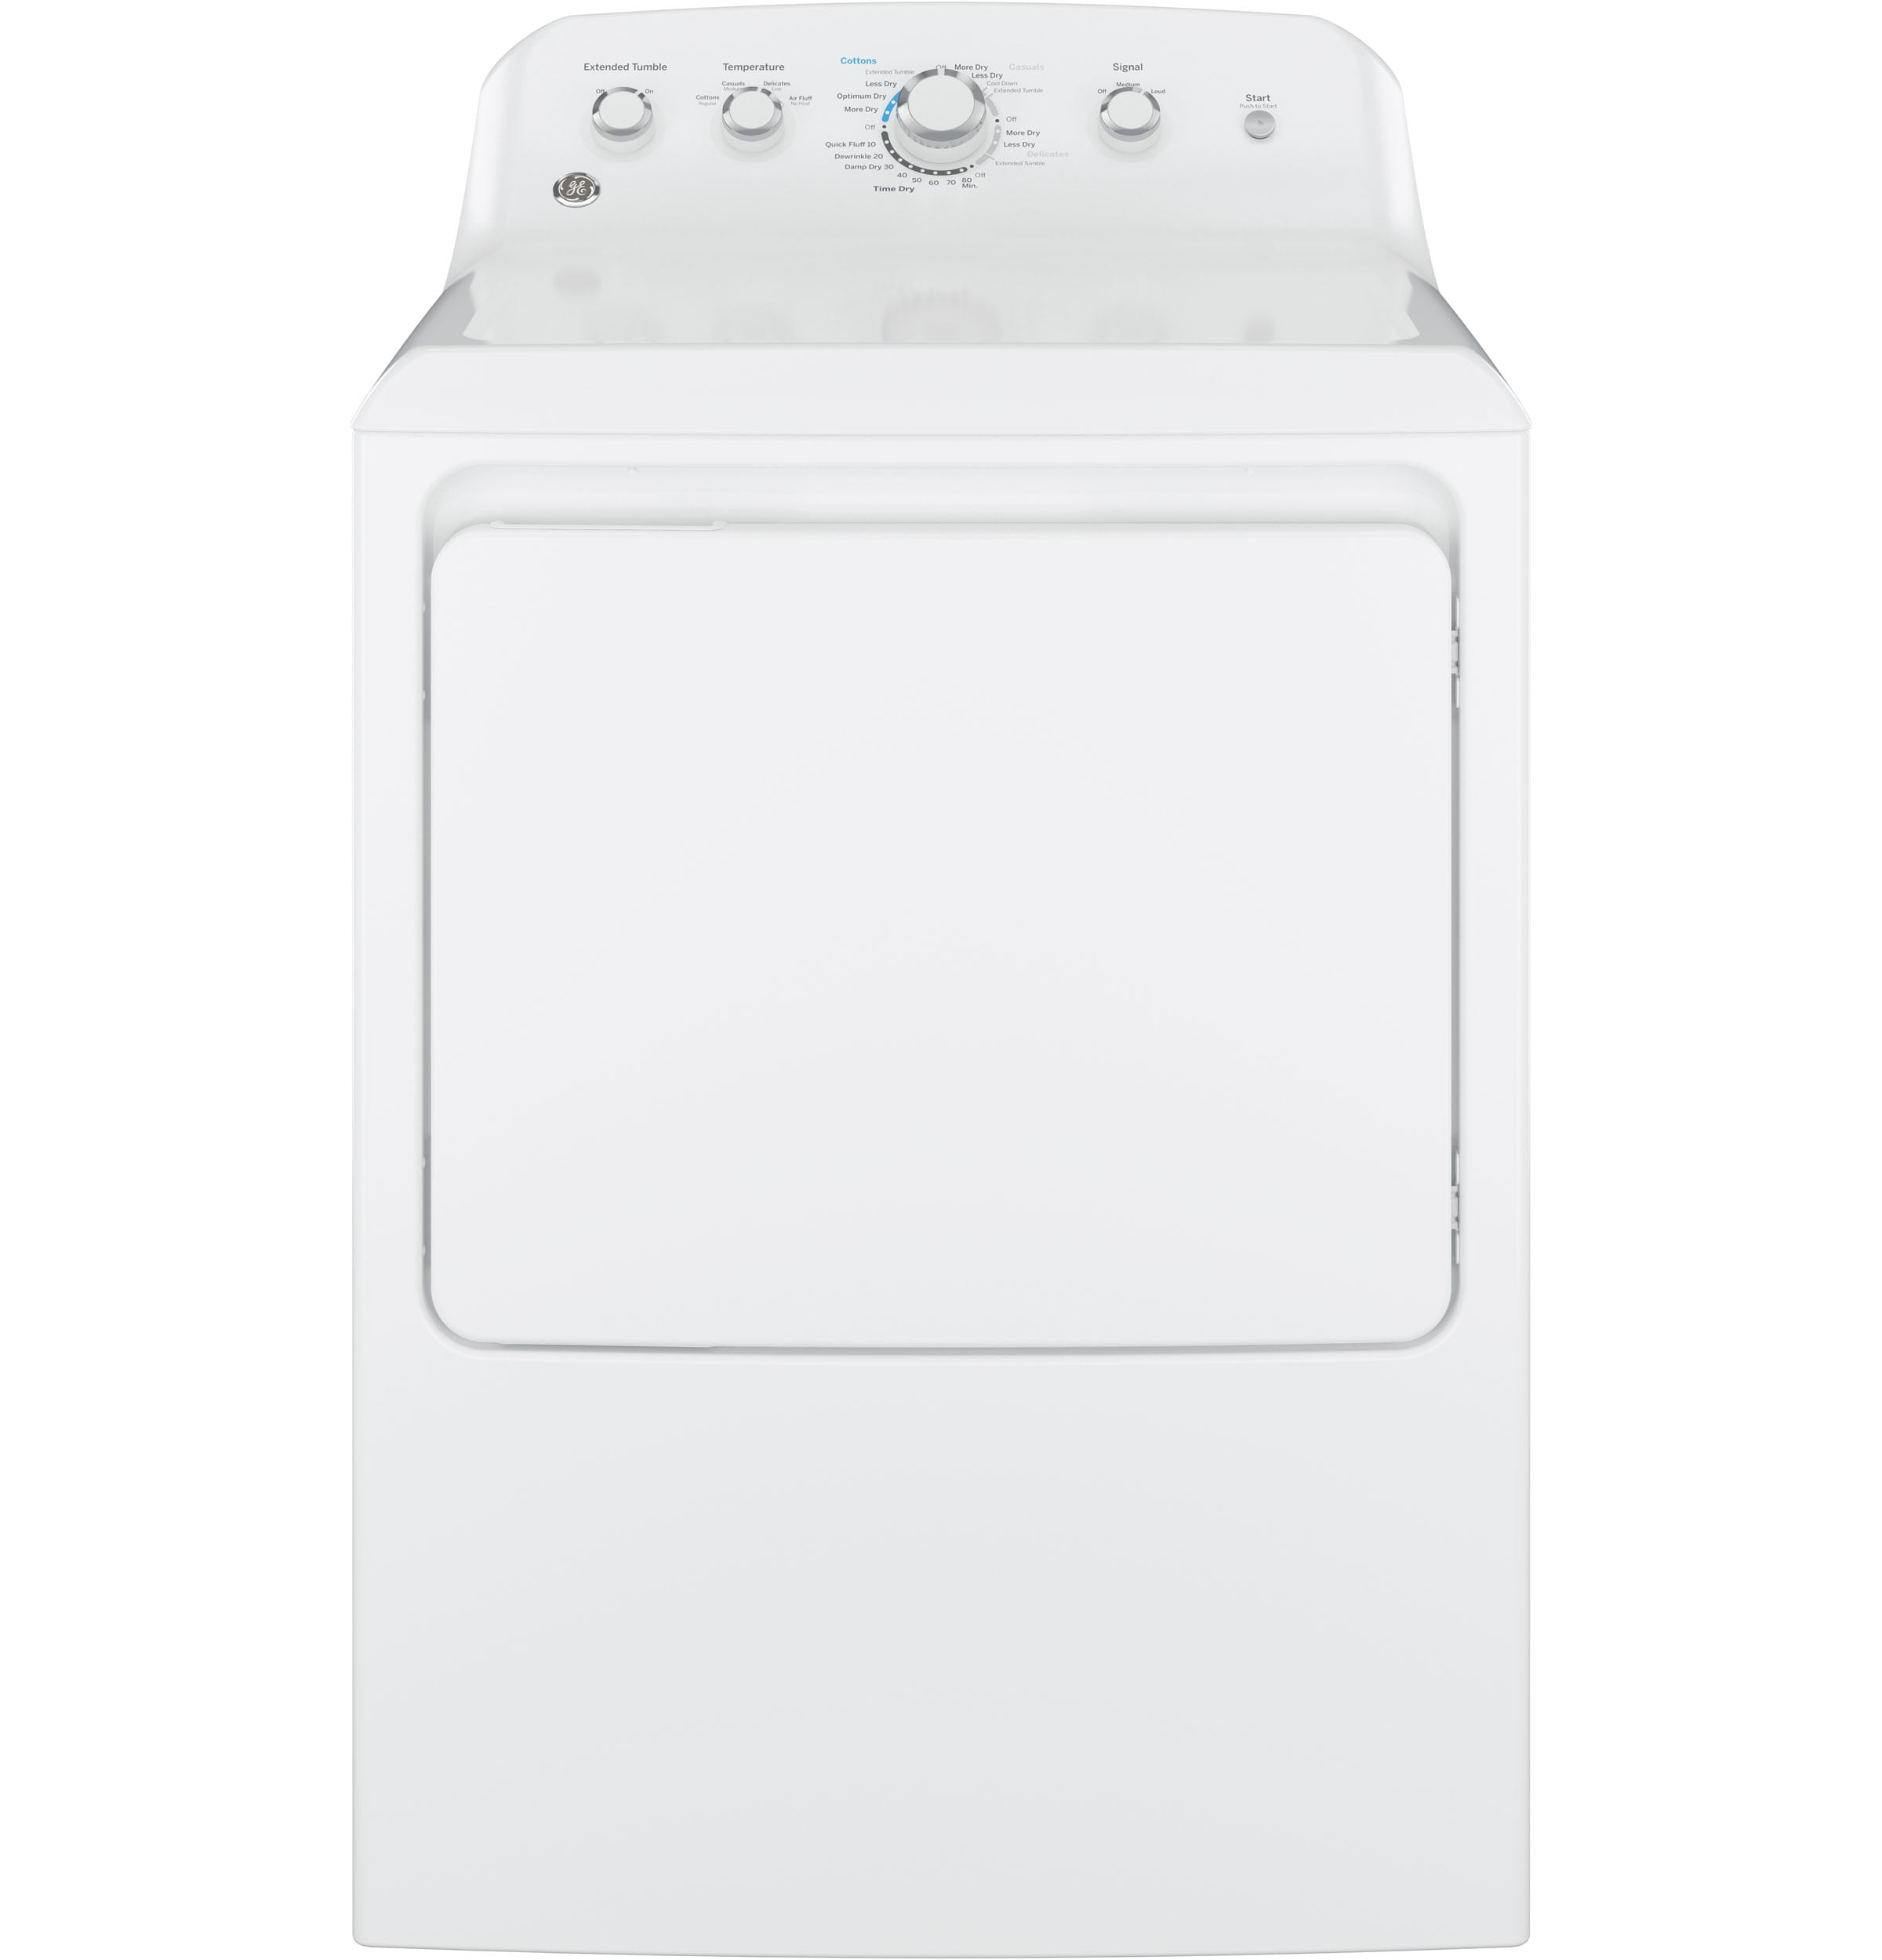 CGD7011LW by Crosley - Crosley Dryer - Gas Dryer - White